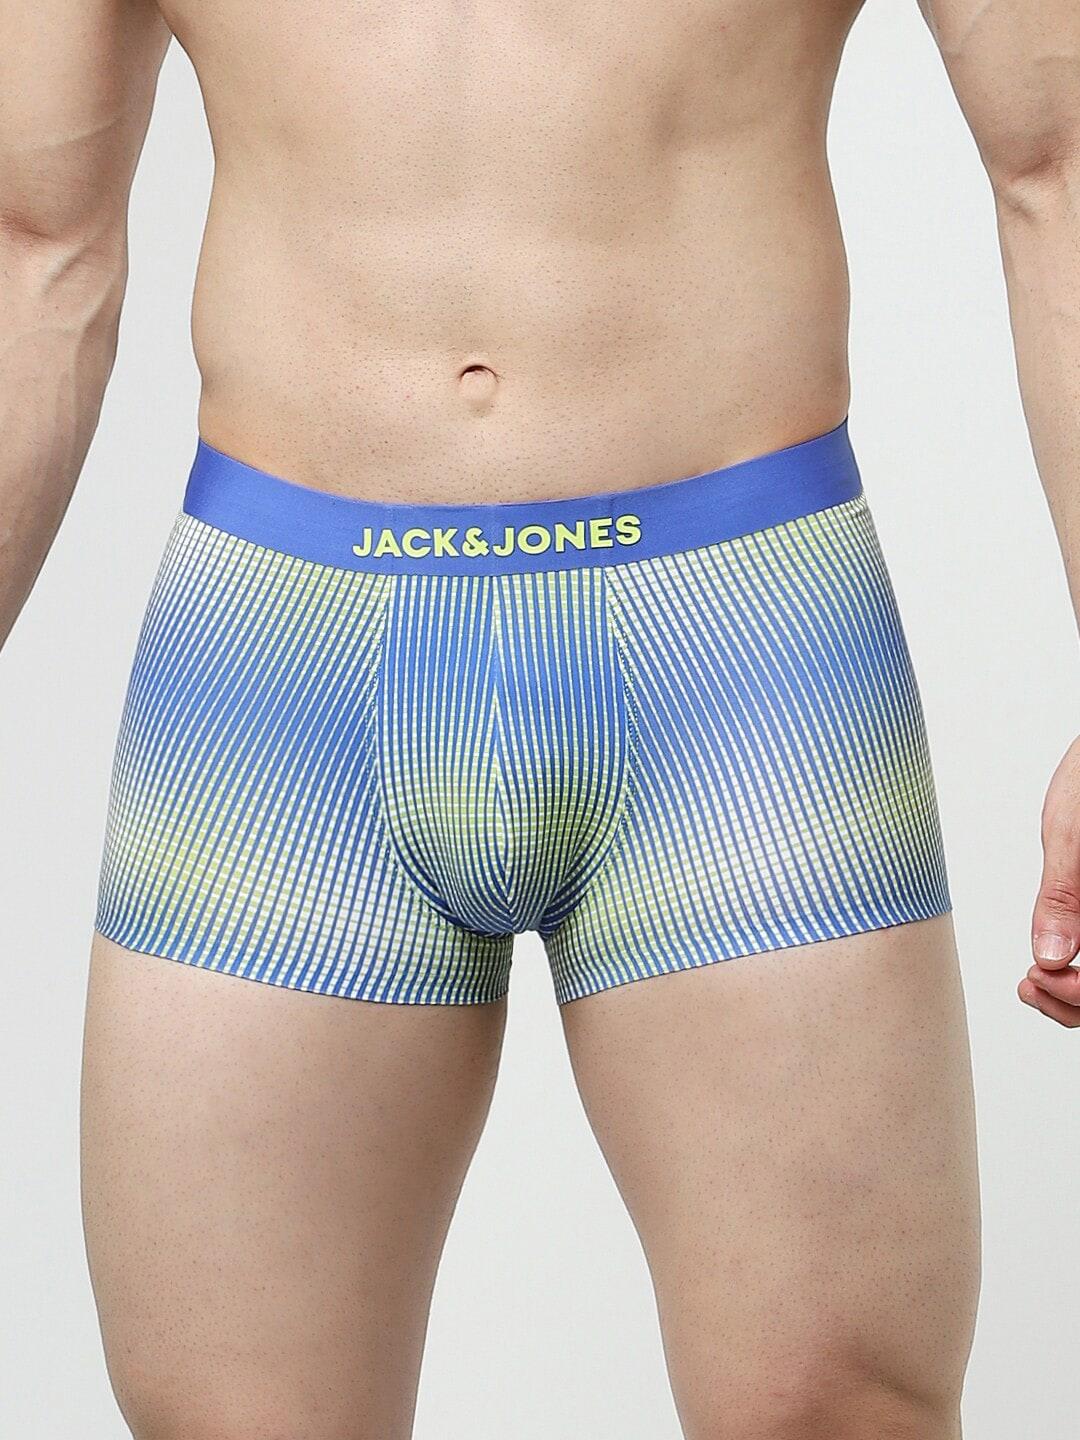 Jack & Jones Printed Trunks 1310047001